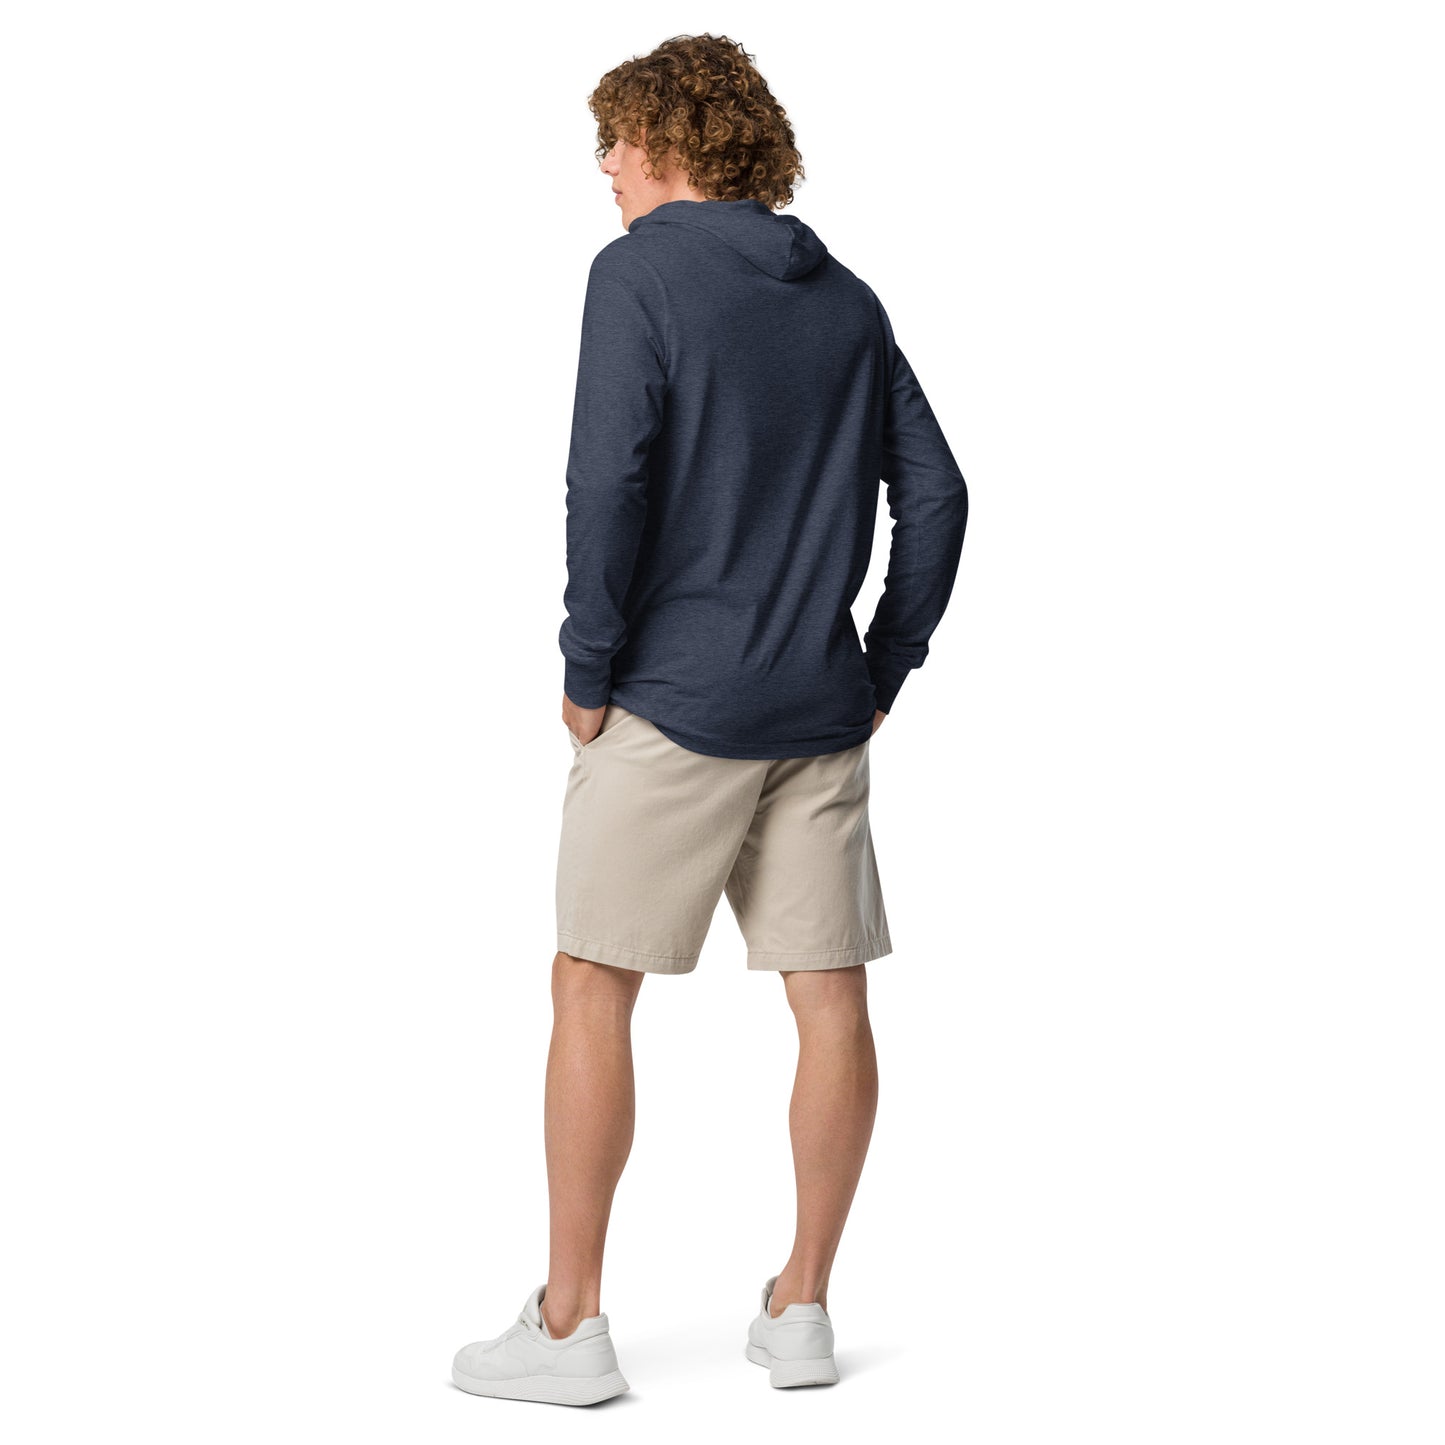 Golf, Titties & College Football Hooded Long-Sleeve T-Shirt(NEW)